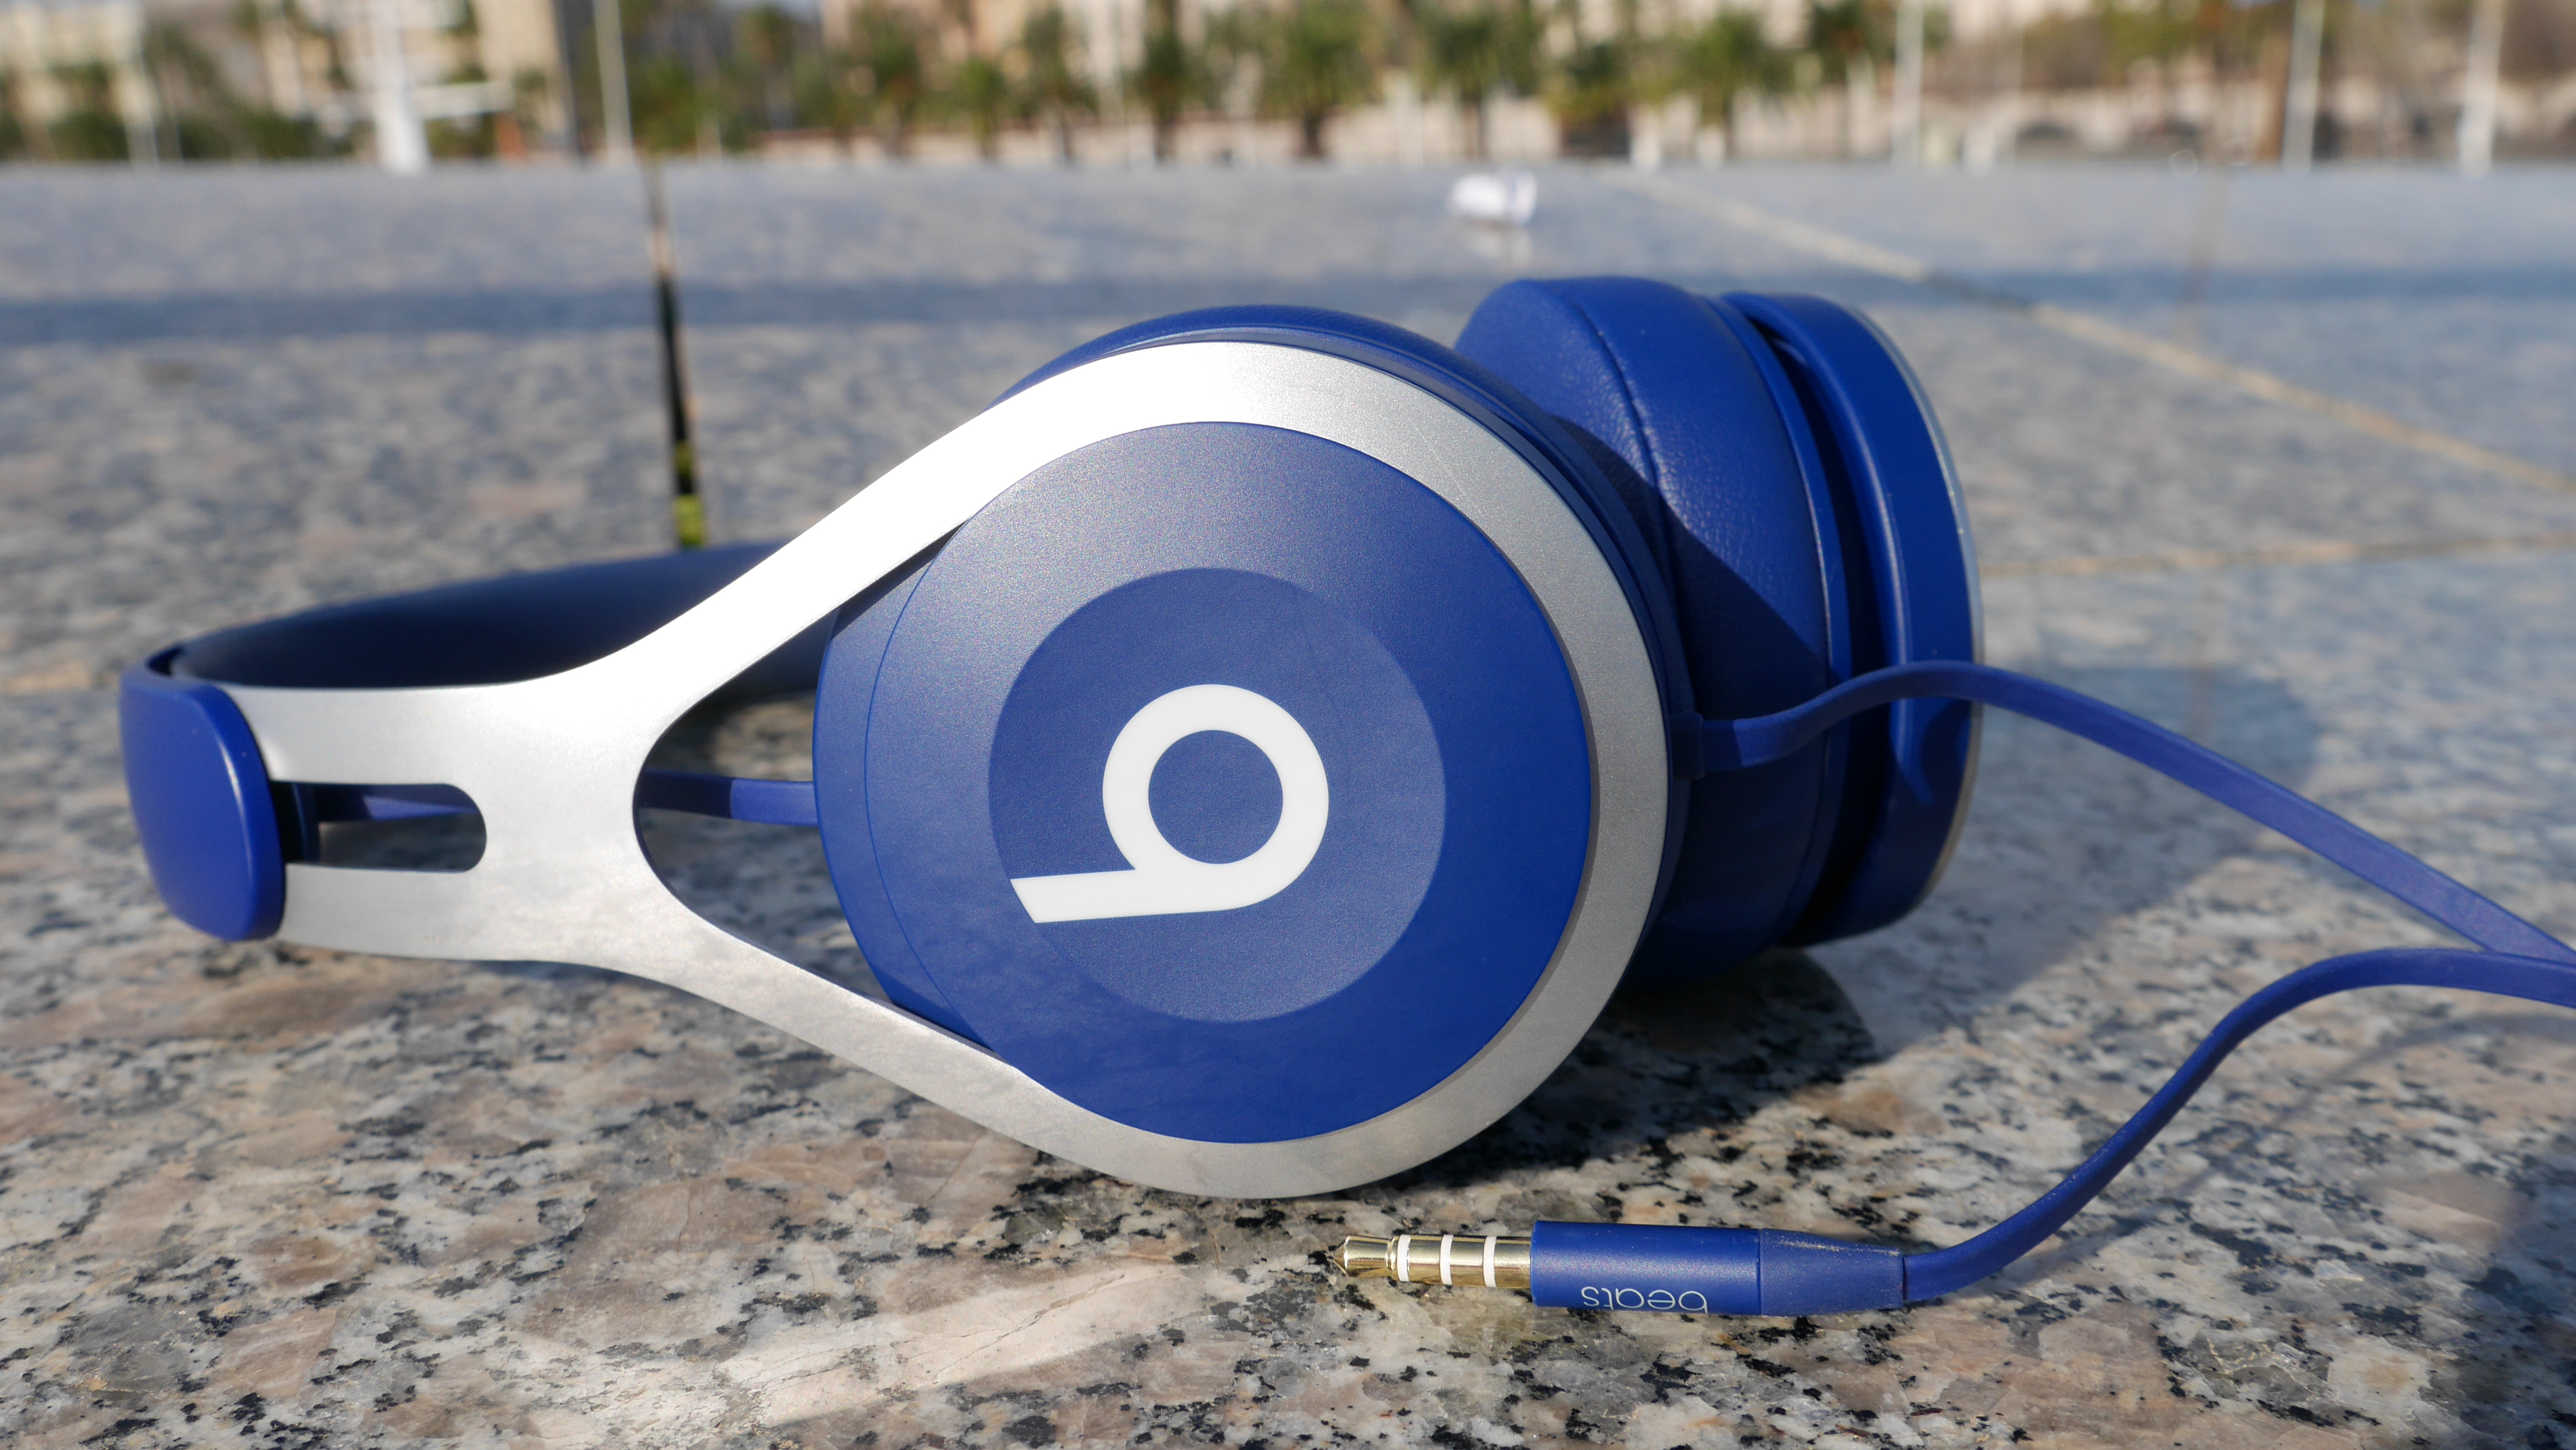 beats ep headphones blue